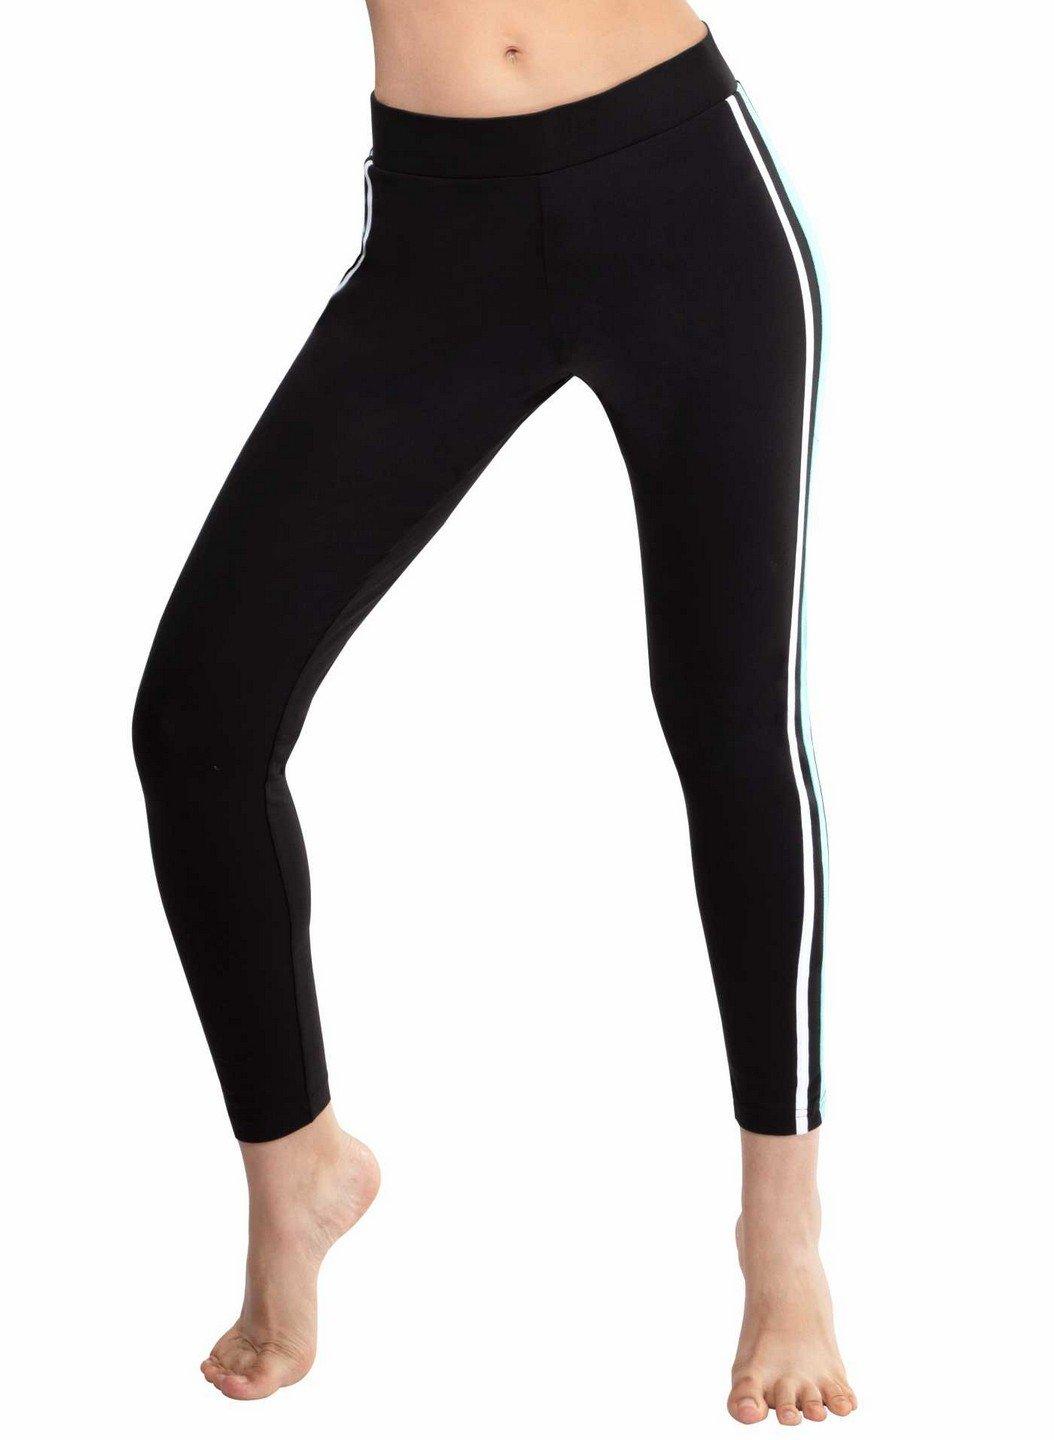 Lovable Black Cotton Gym Wear Tights Yoga Pants With Pocket - Stilento